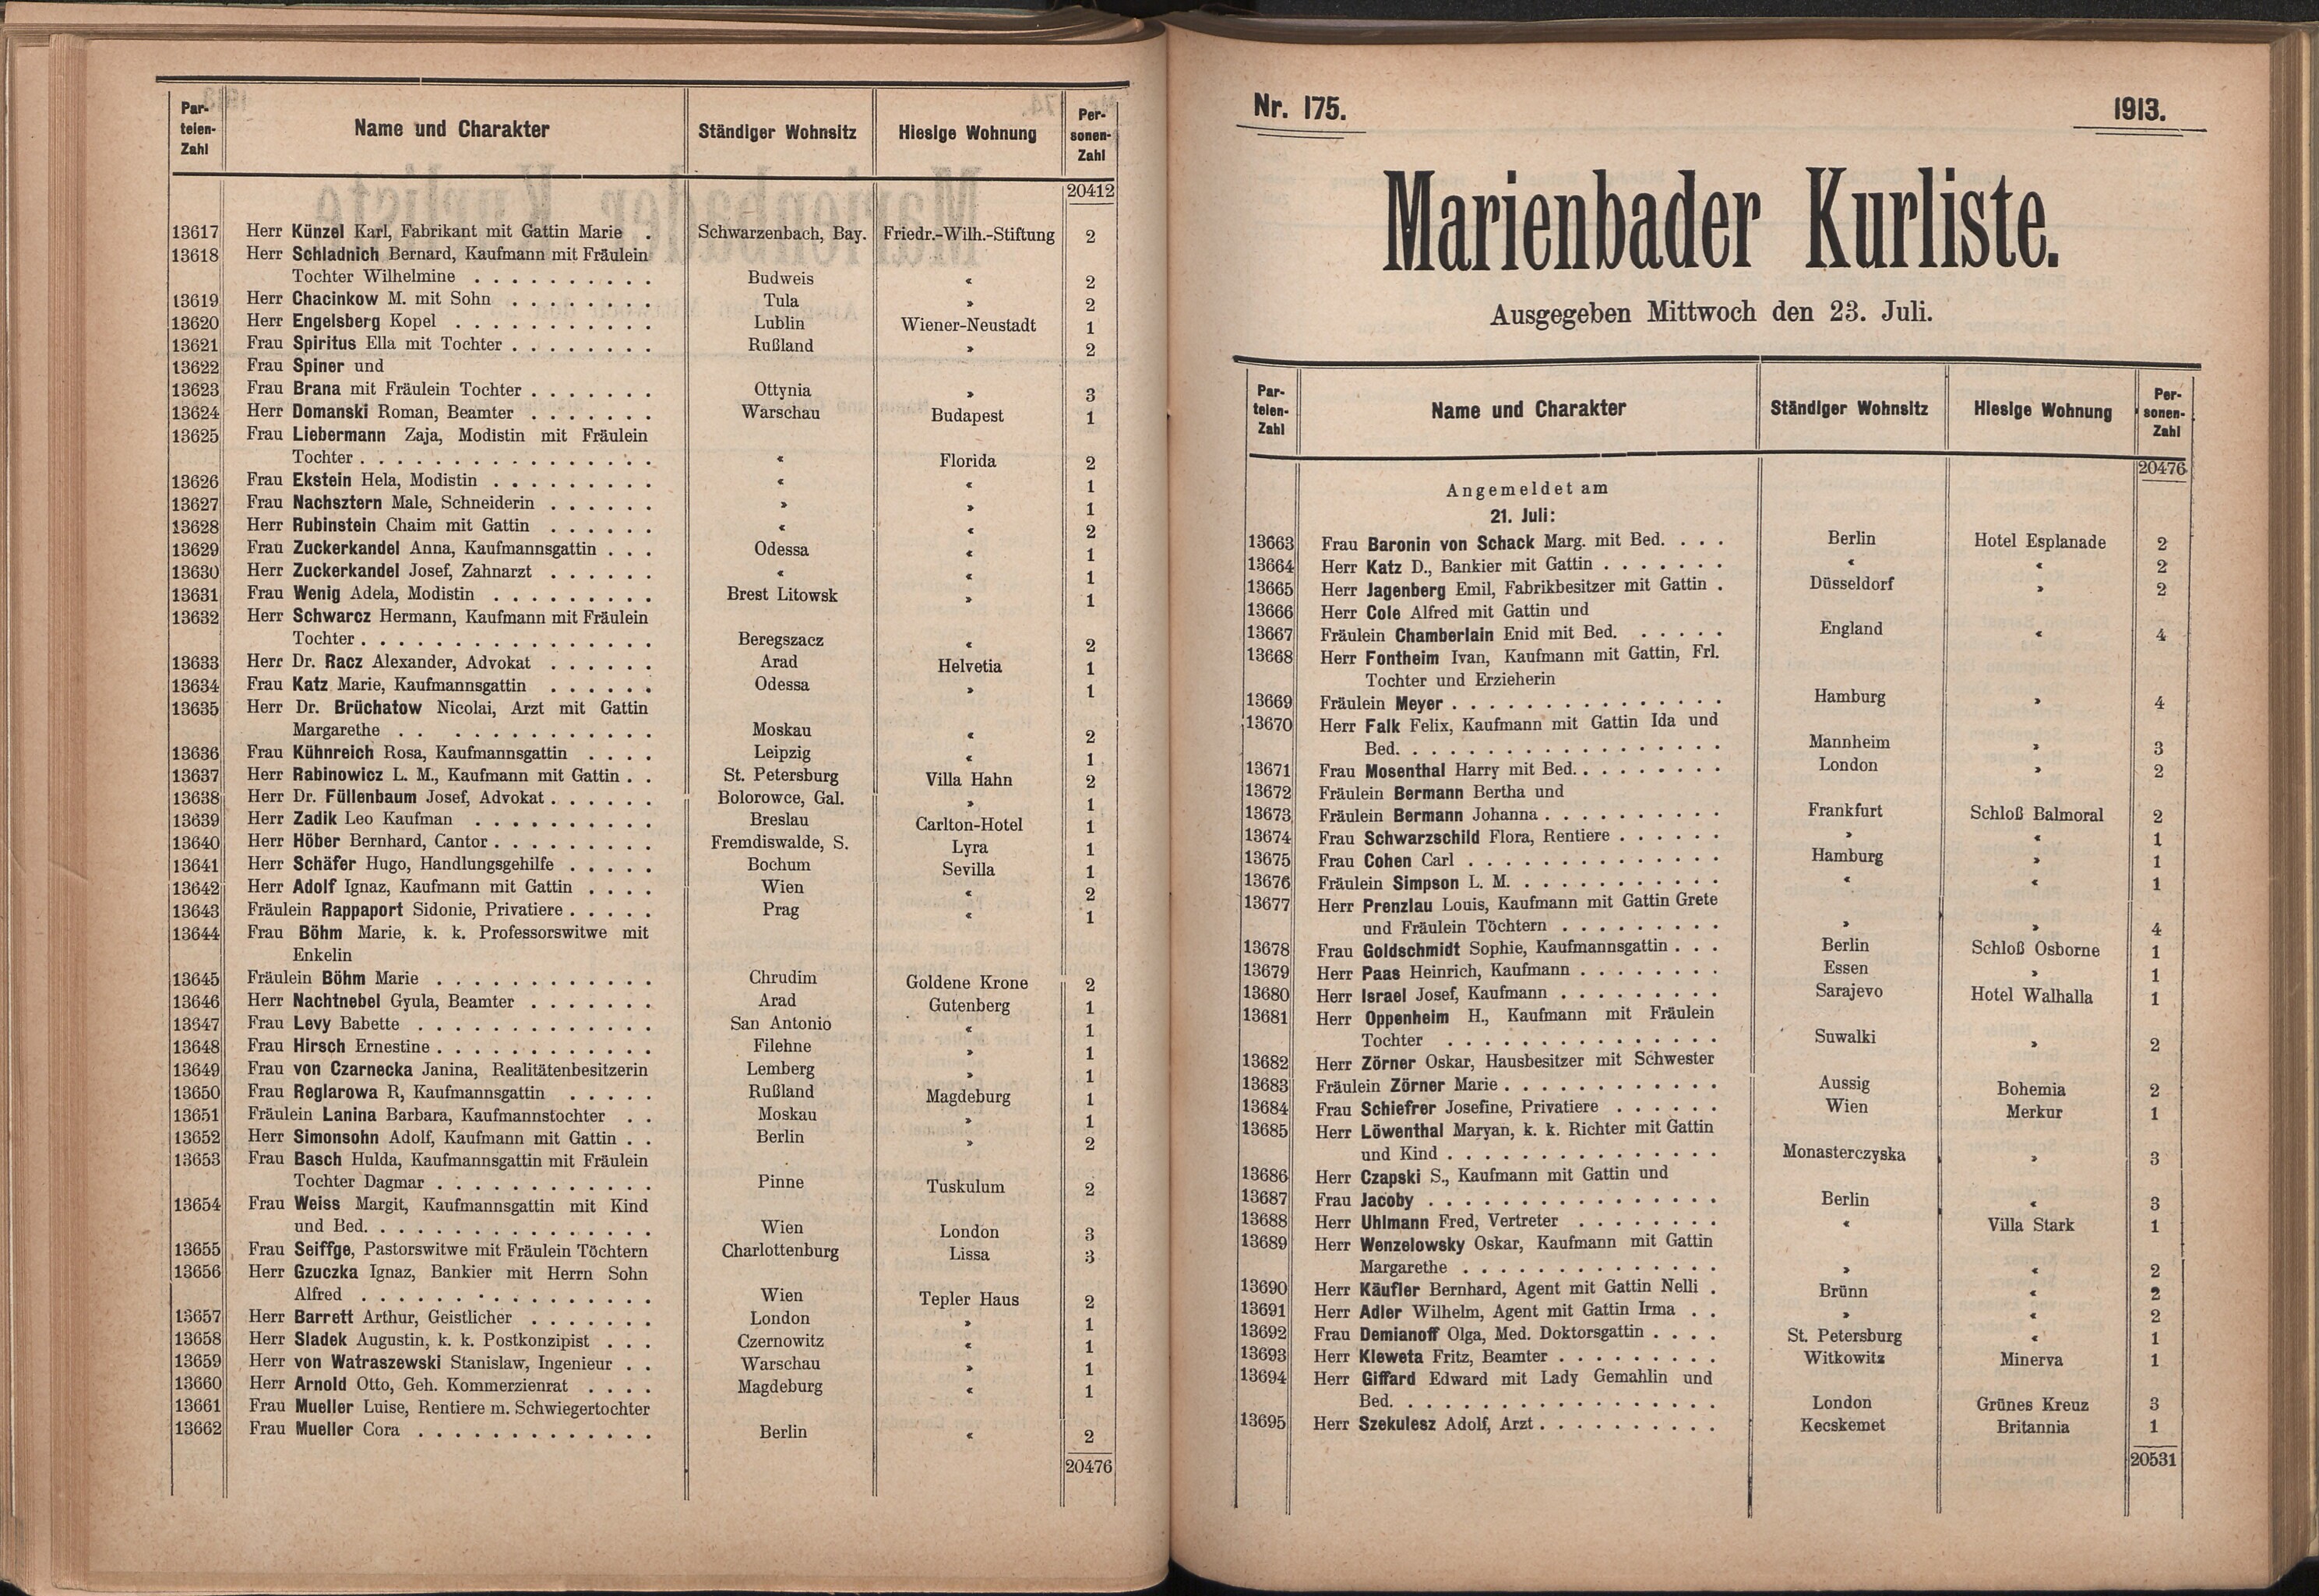 192. soap-ch_knihovna_marienbader-kurliste-1913_1920